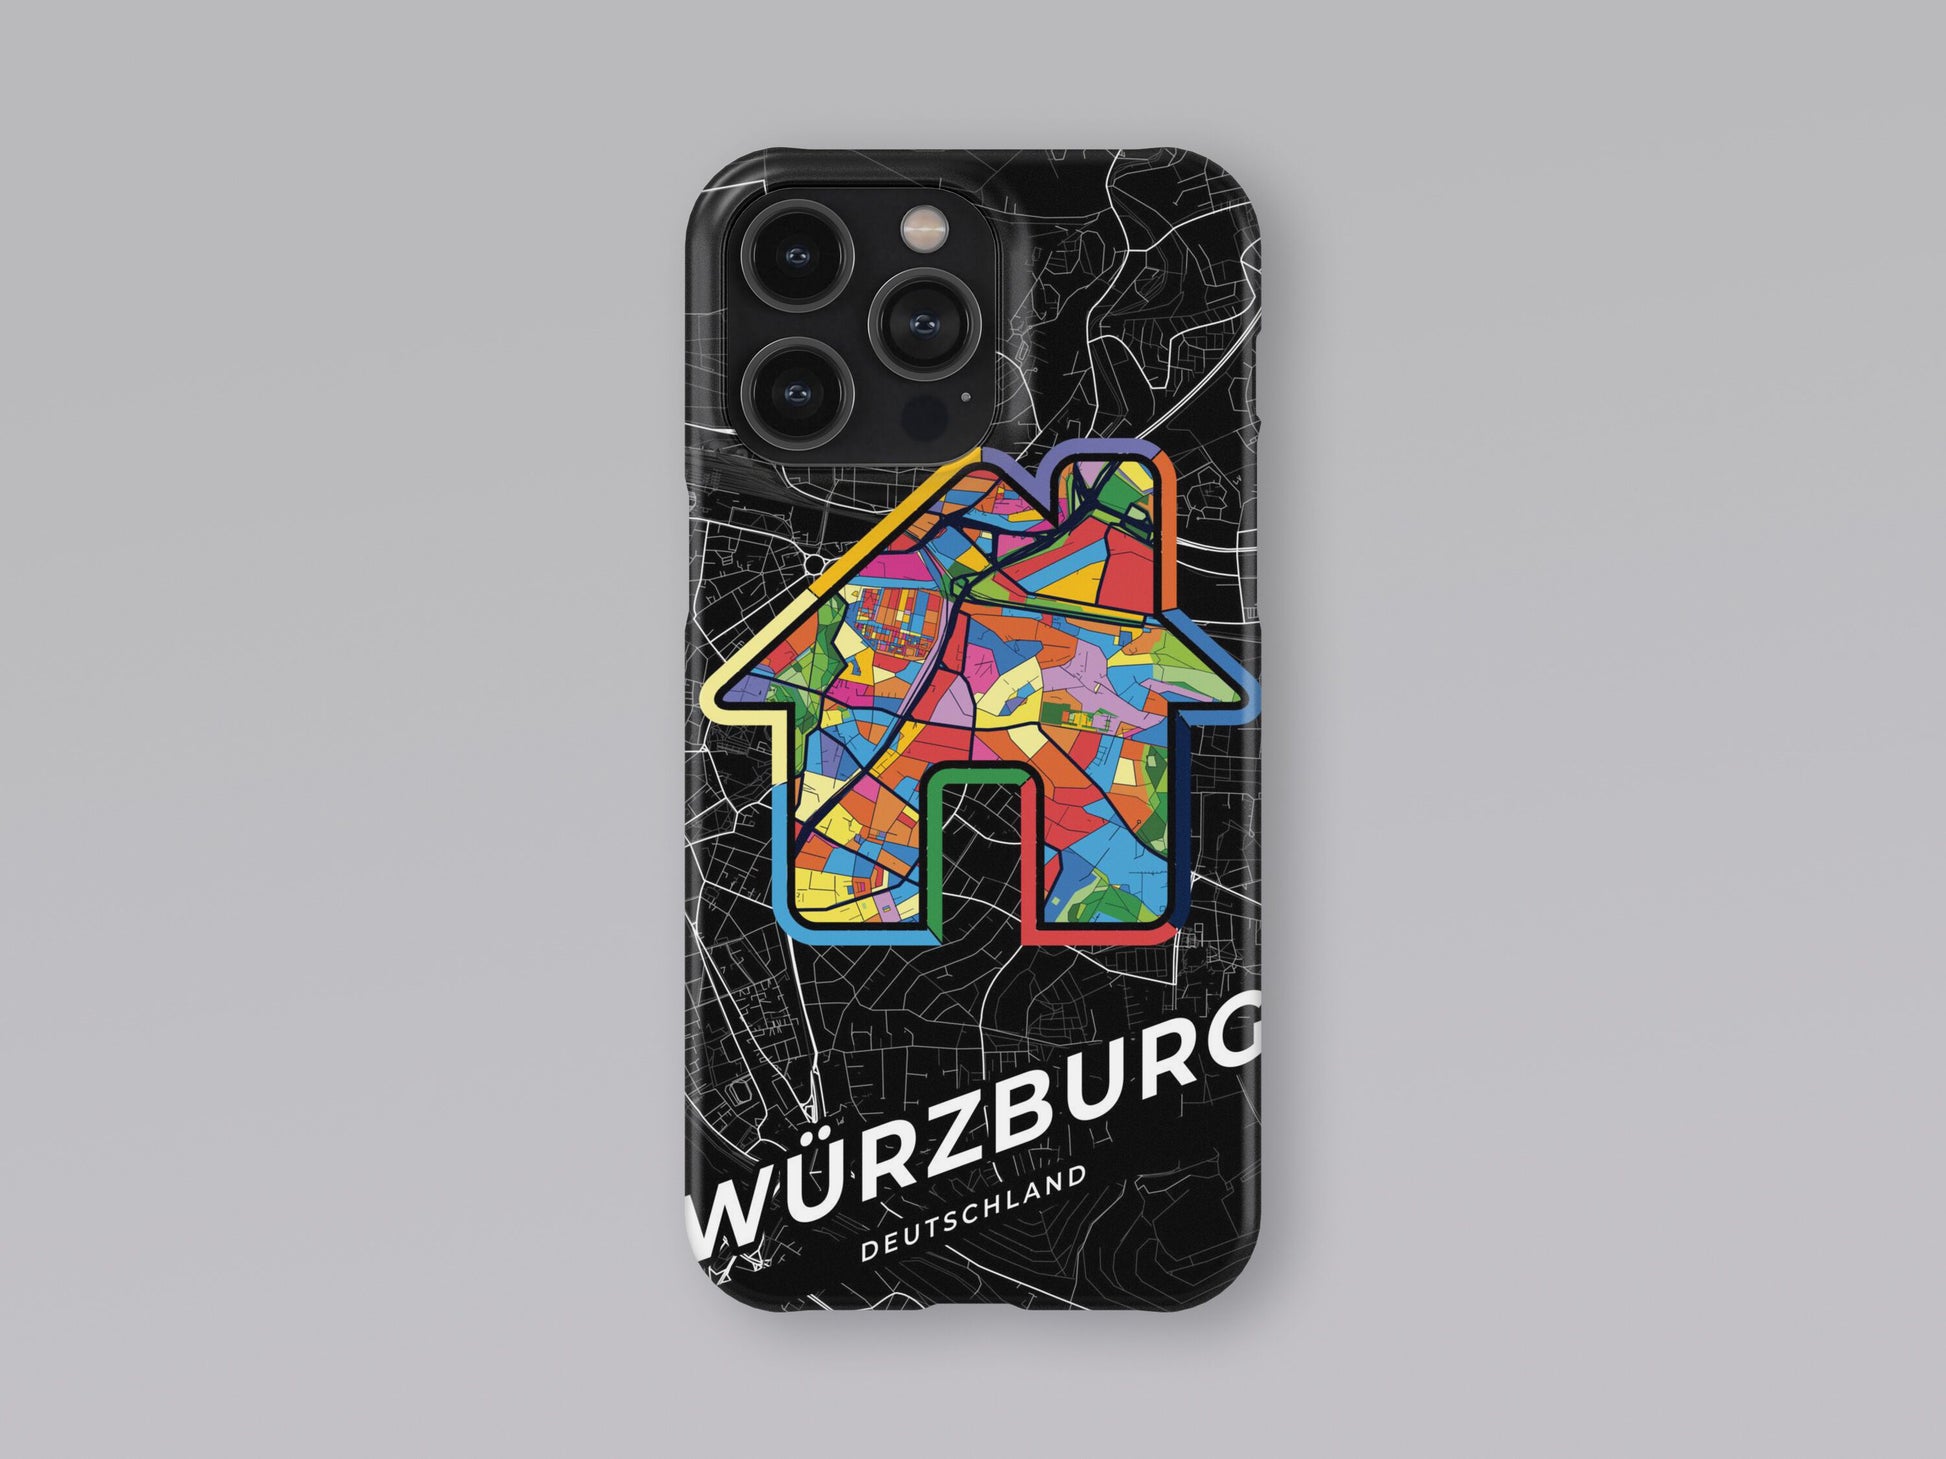 Würzburg Deutschland slim phone case with colorful icon. Birthday, wedding or housewarming gift. Couple match cases. 3